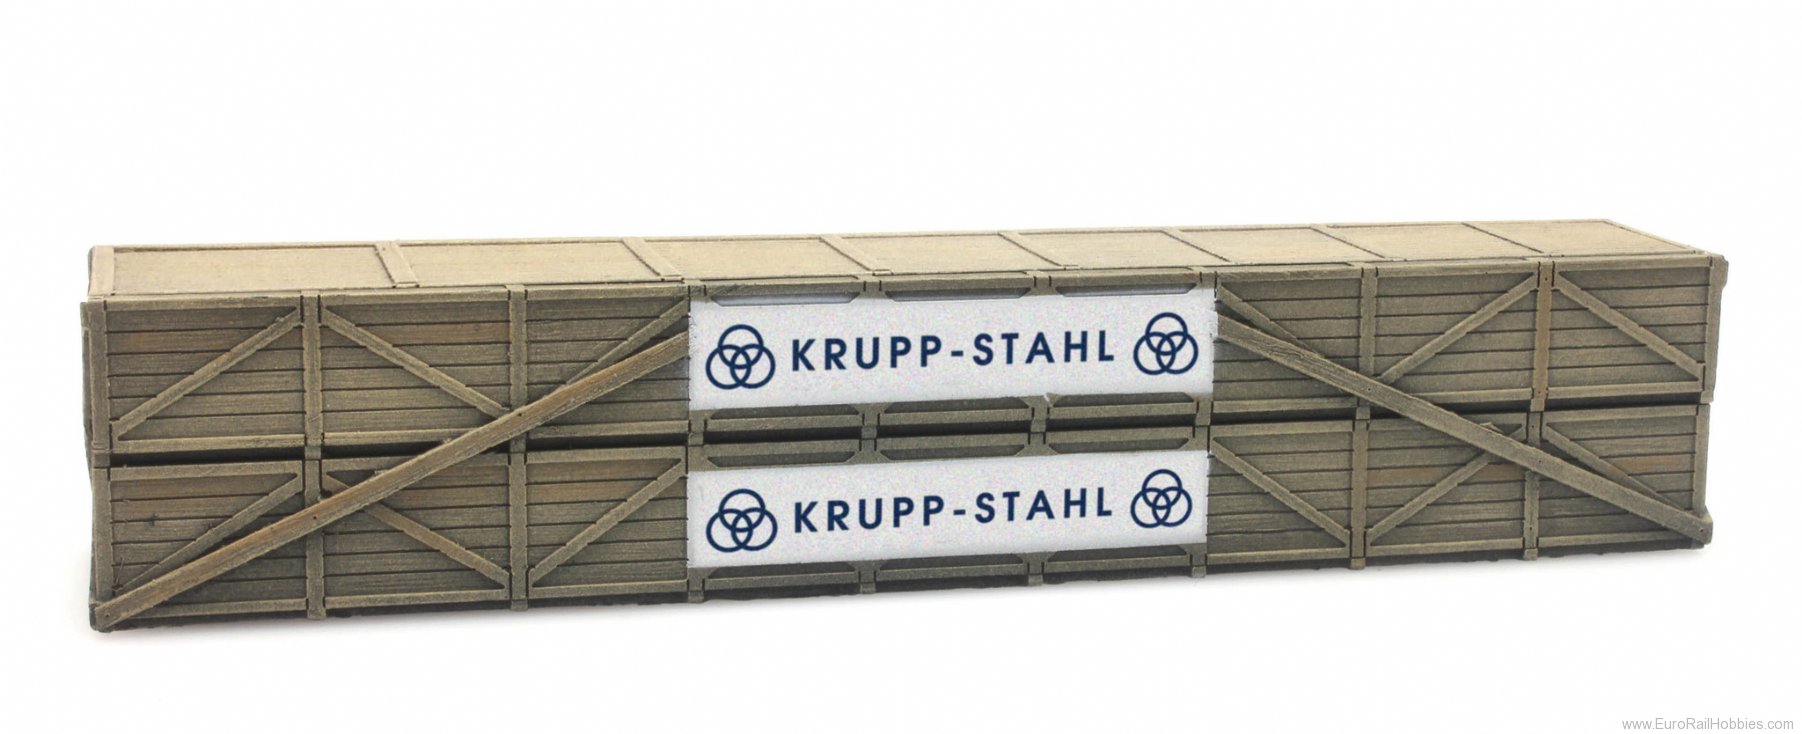 Artitec 487.801.70 Cargo: Shipping crate: Krupp-Stahl